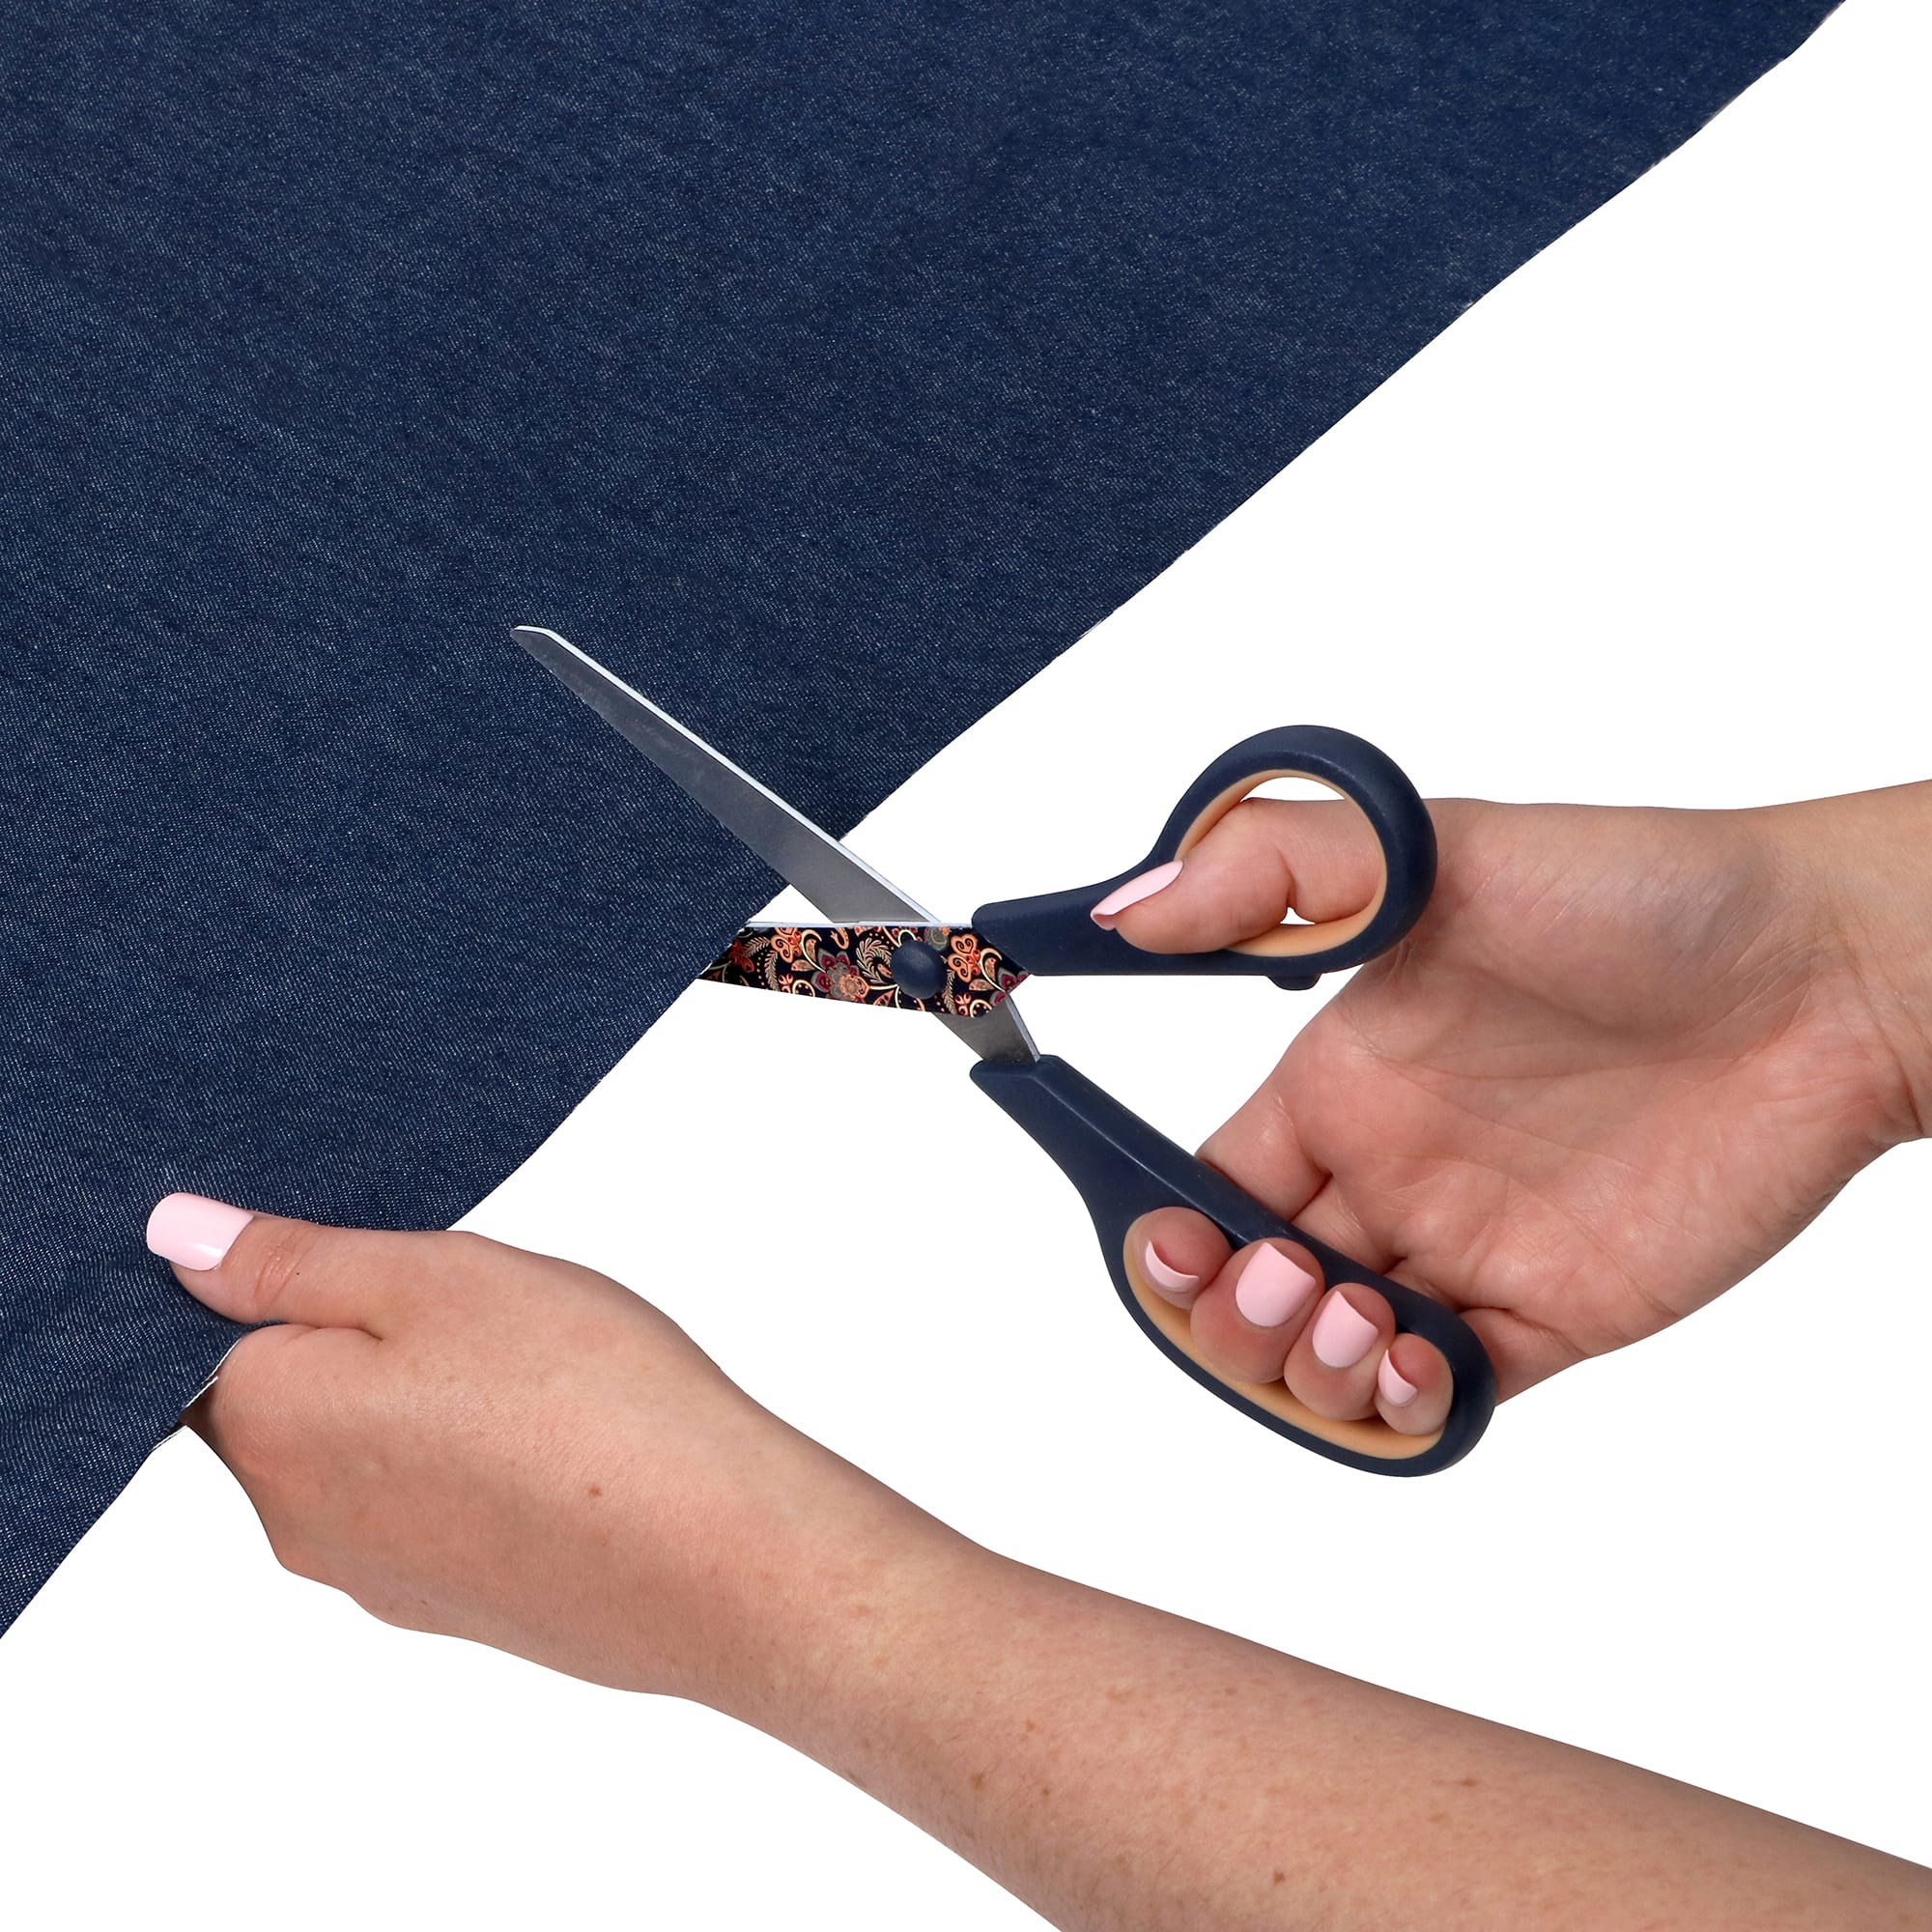 SINGER® Paisley Polka Dot Printed 8.5 Fabric Scissors & 5.5 Detail Craft  Scissors Set